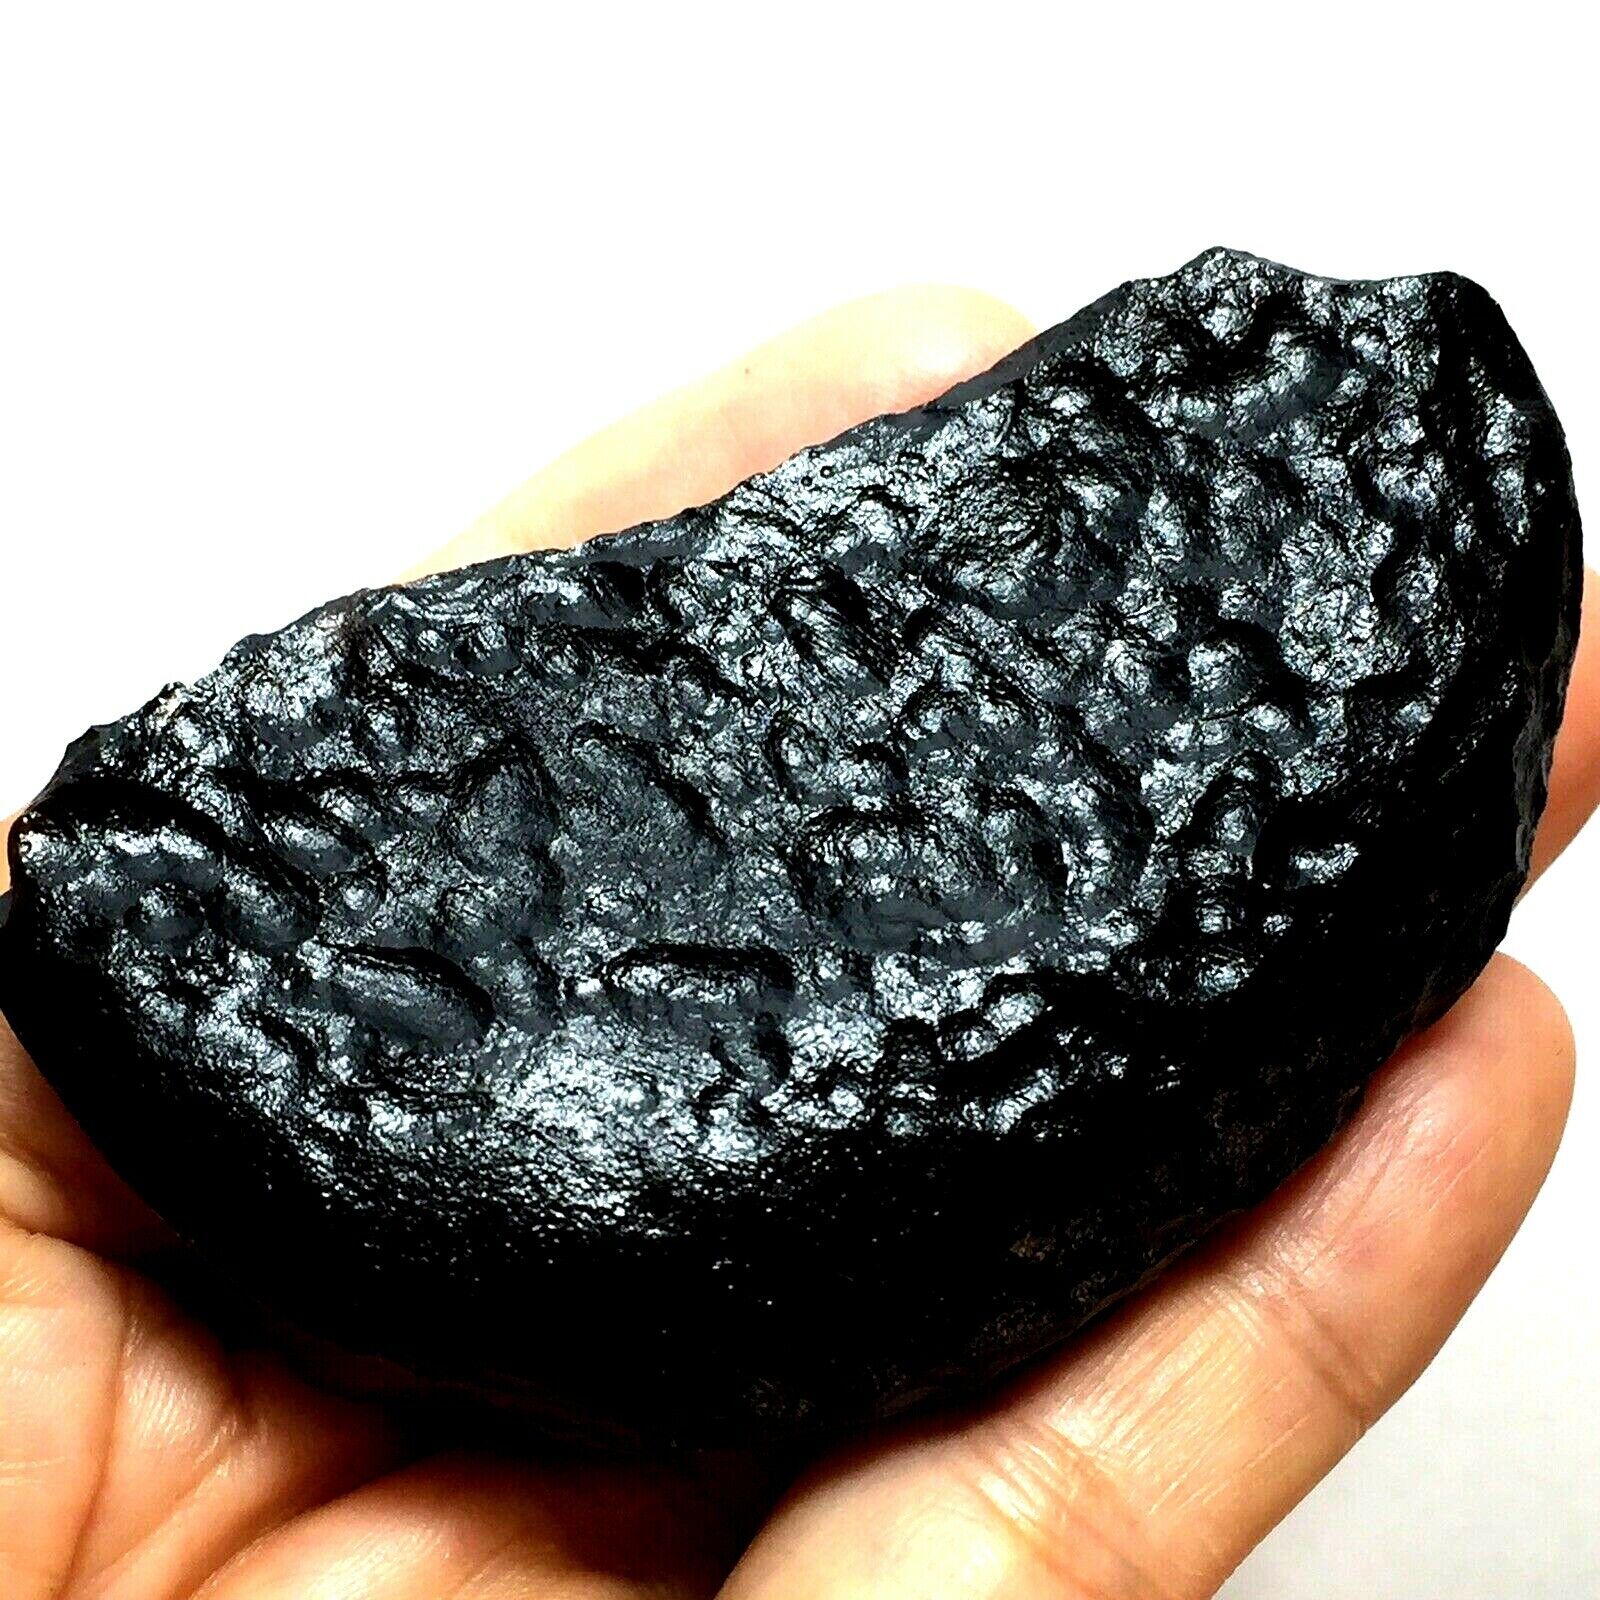 tektite indochinite space rock impactite meteorite impact stone gems 55 G rare